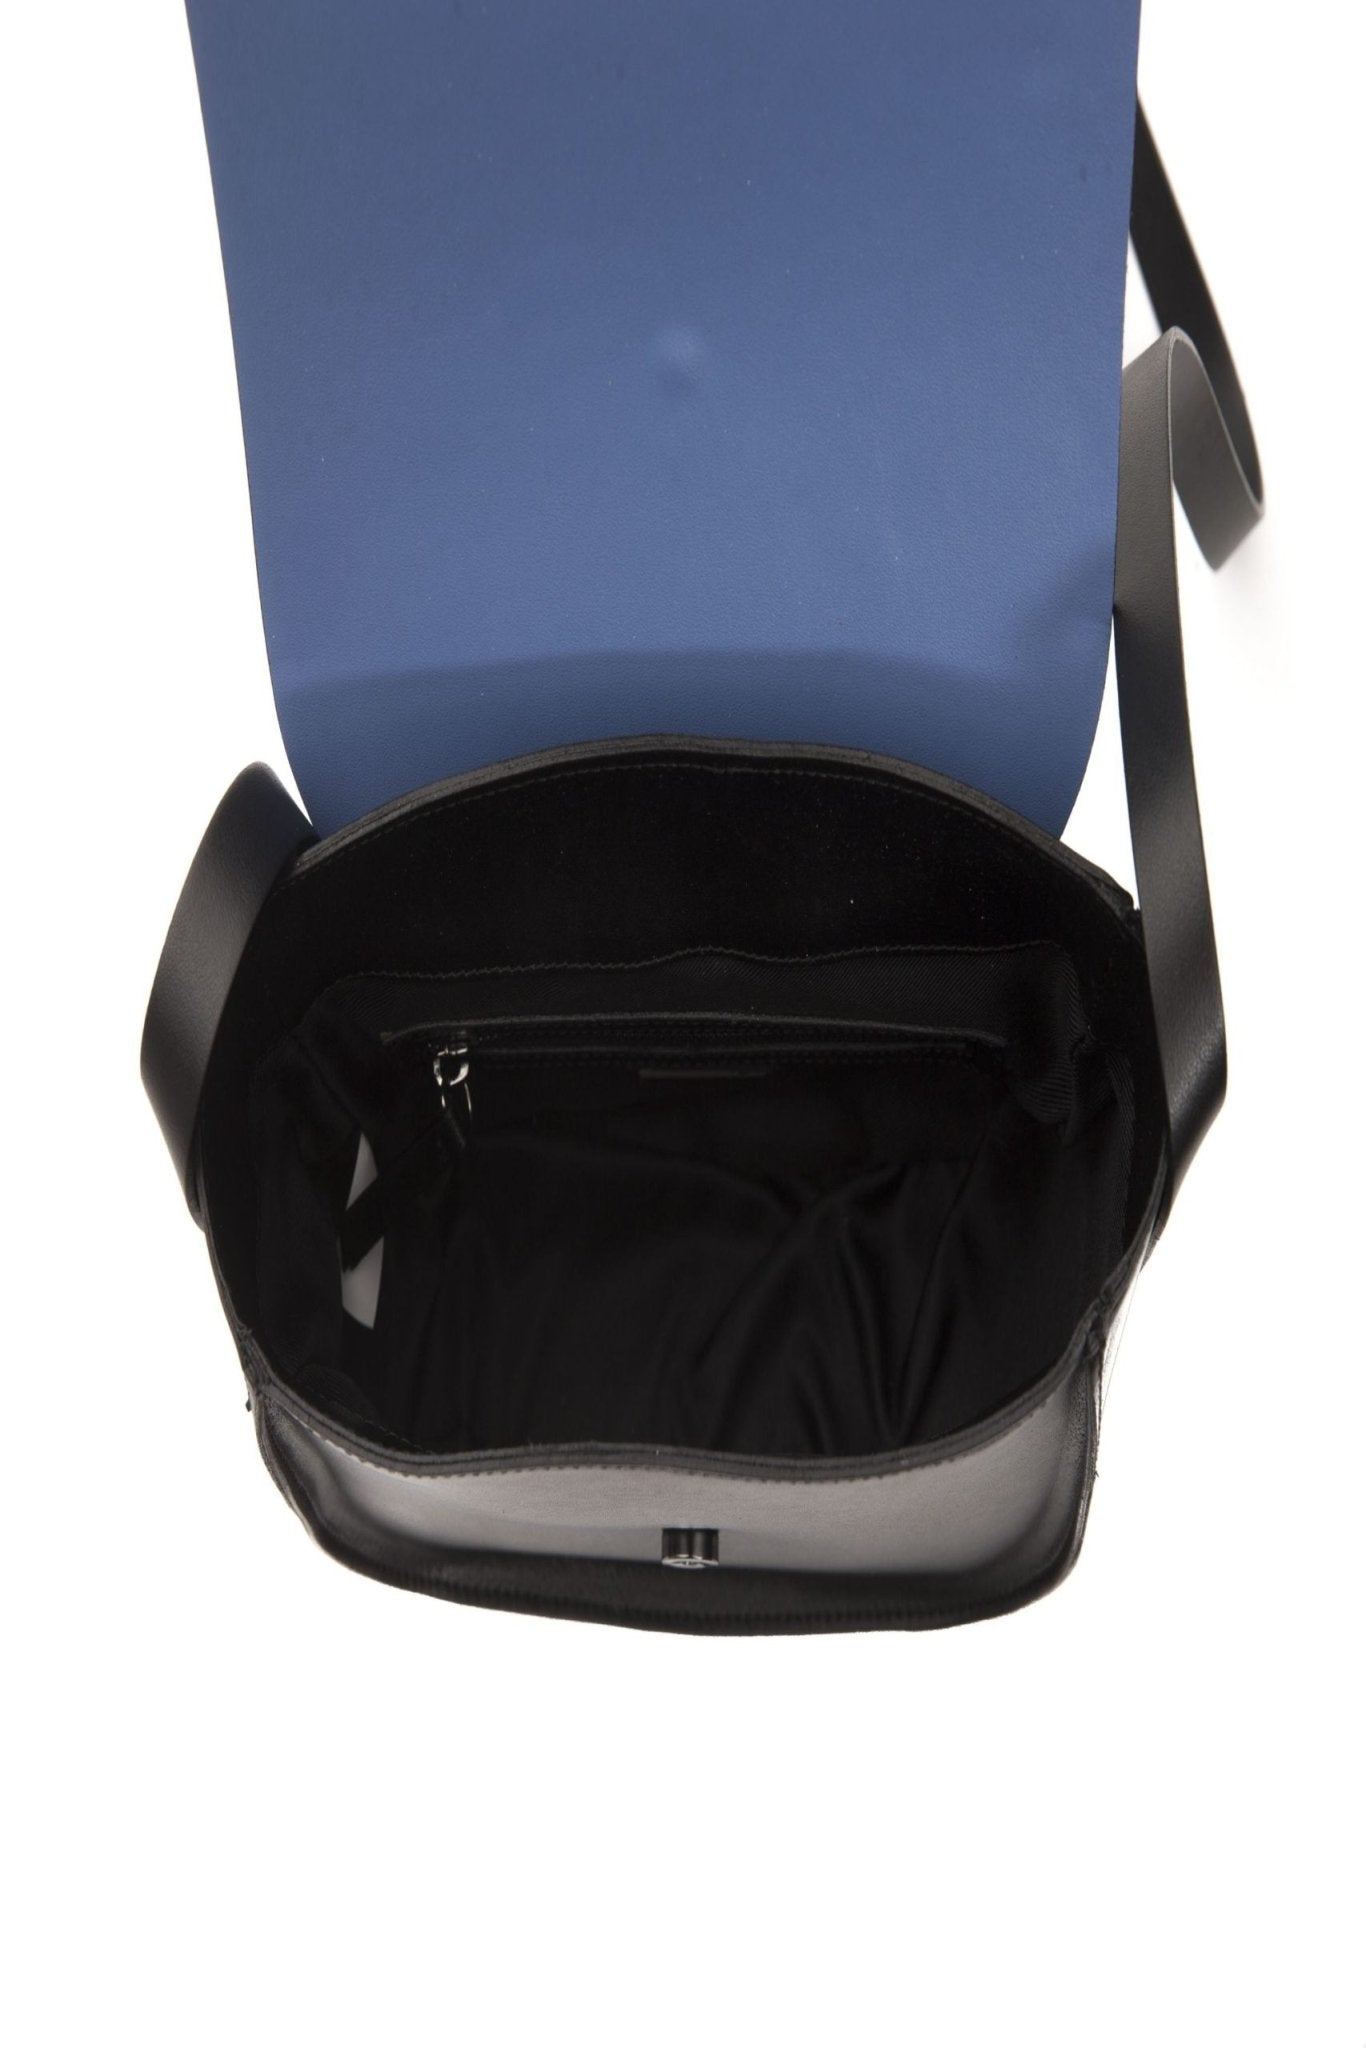 Pompei Donatella Blue Leather Crossbody Bag - Fizigo